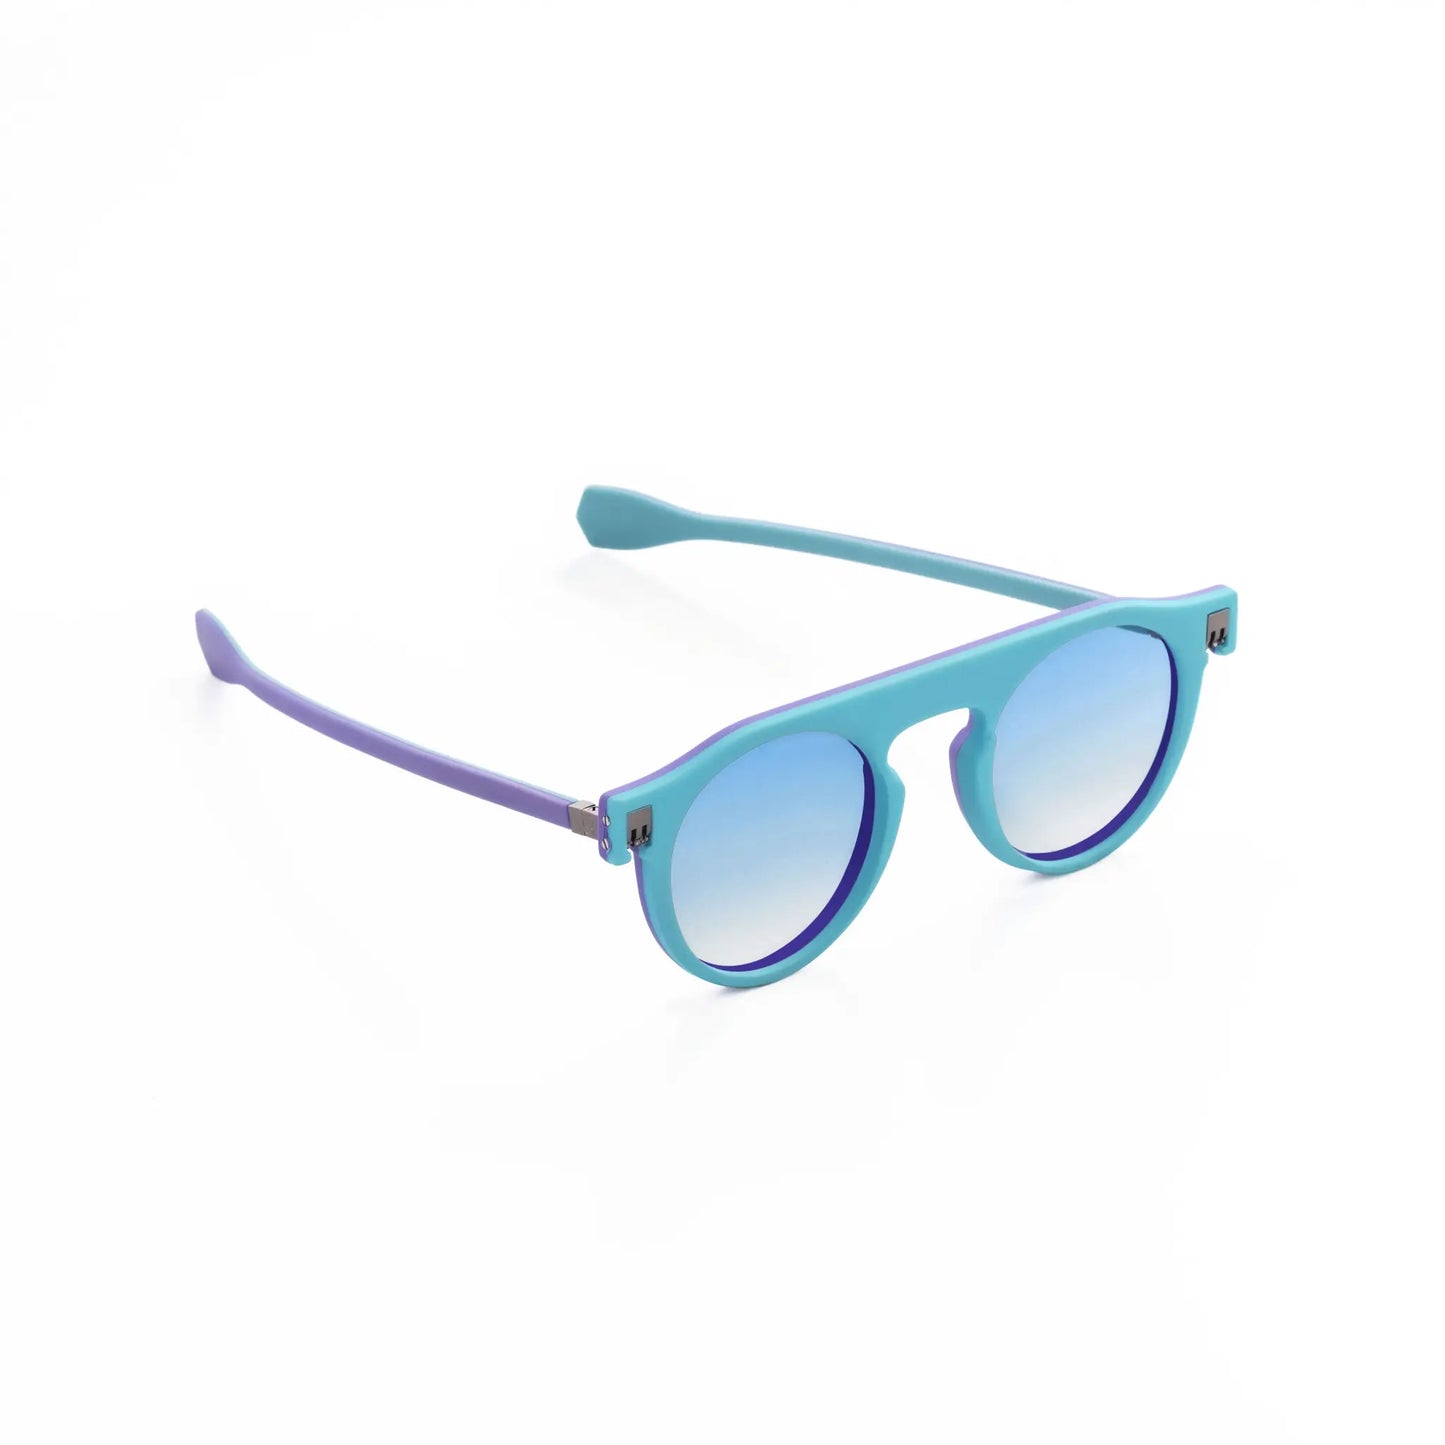 Reverso sunglasses Light Blue & purple reversible & ultra light side view 2